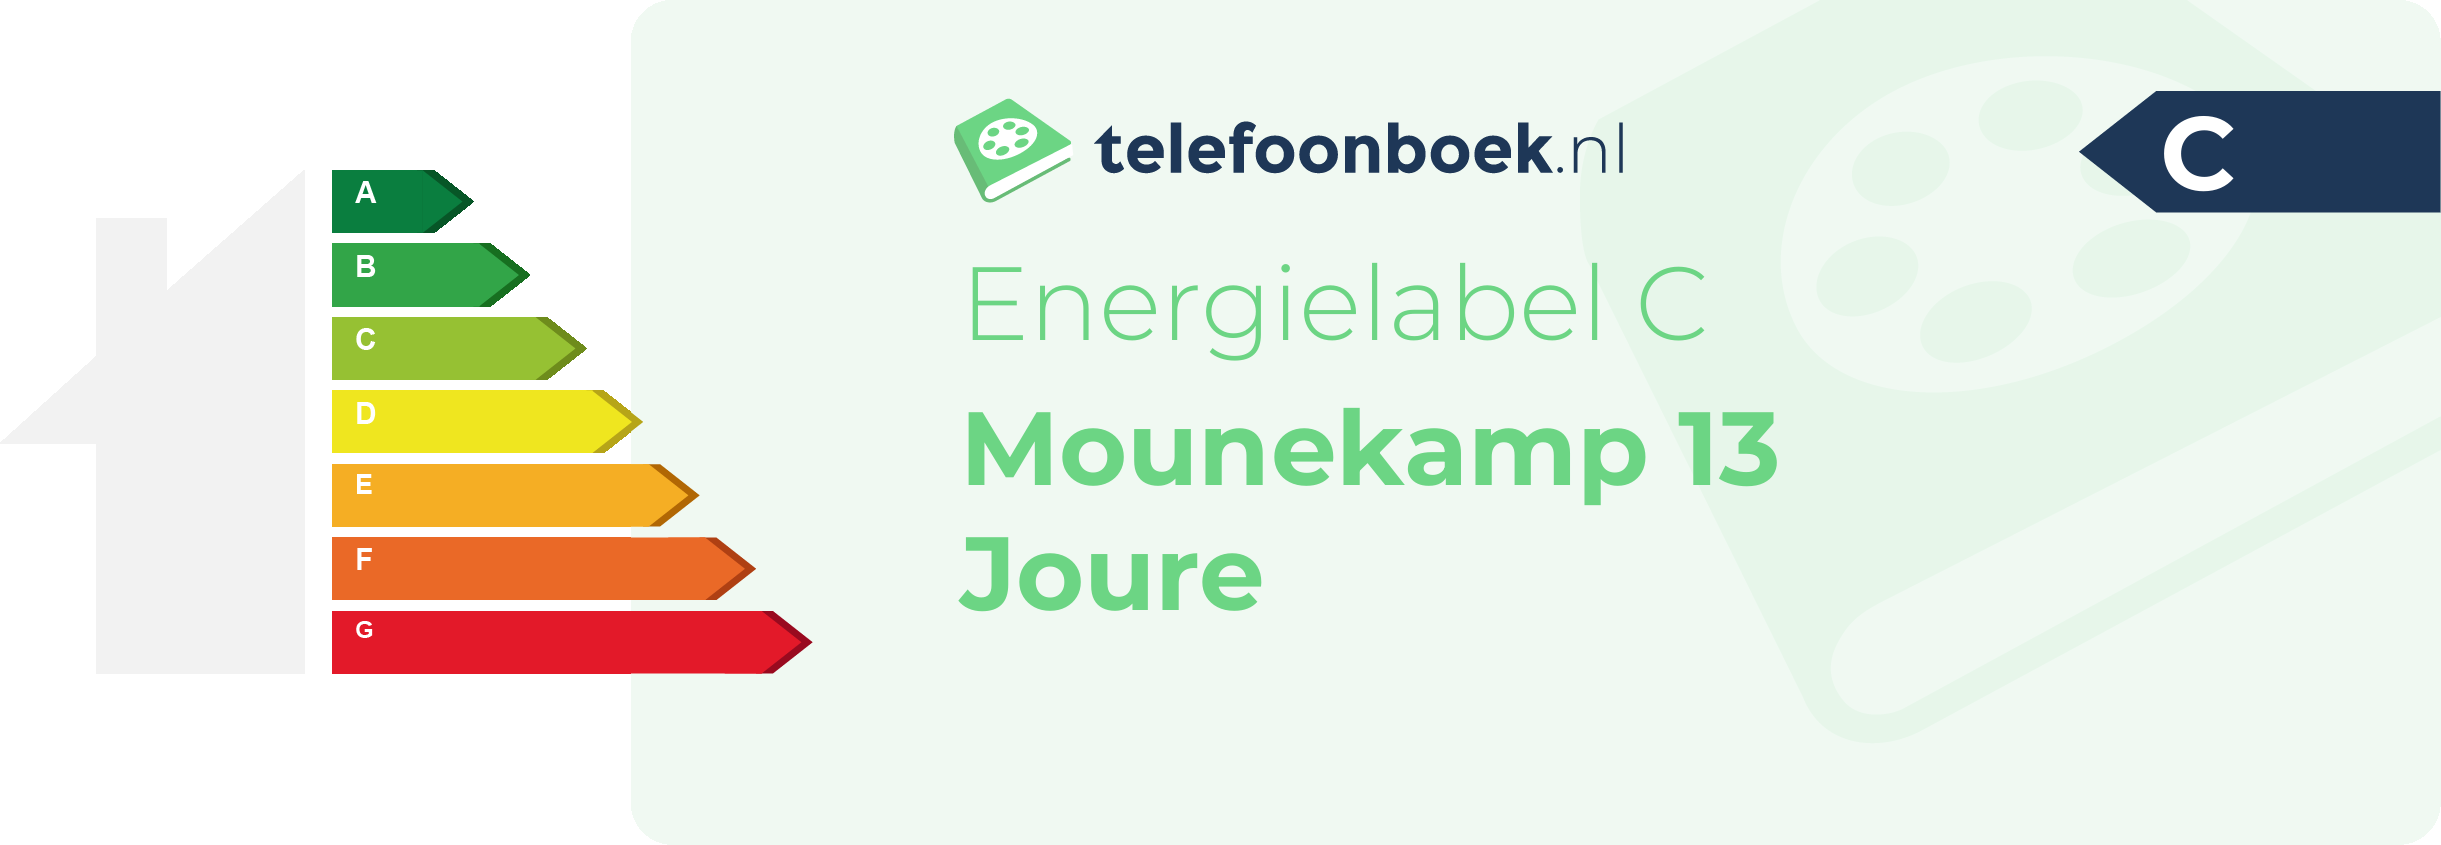 Energielabel Mounekamp 13 Joure